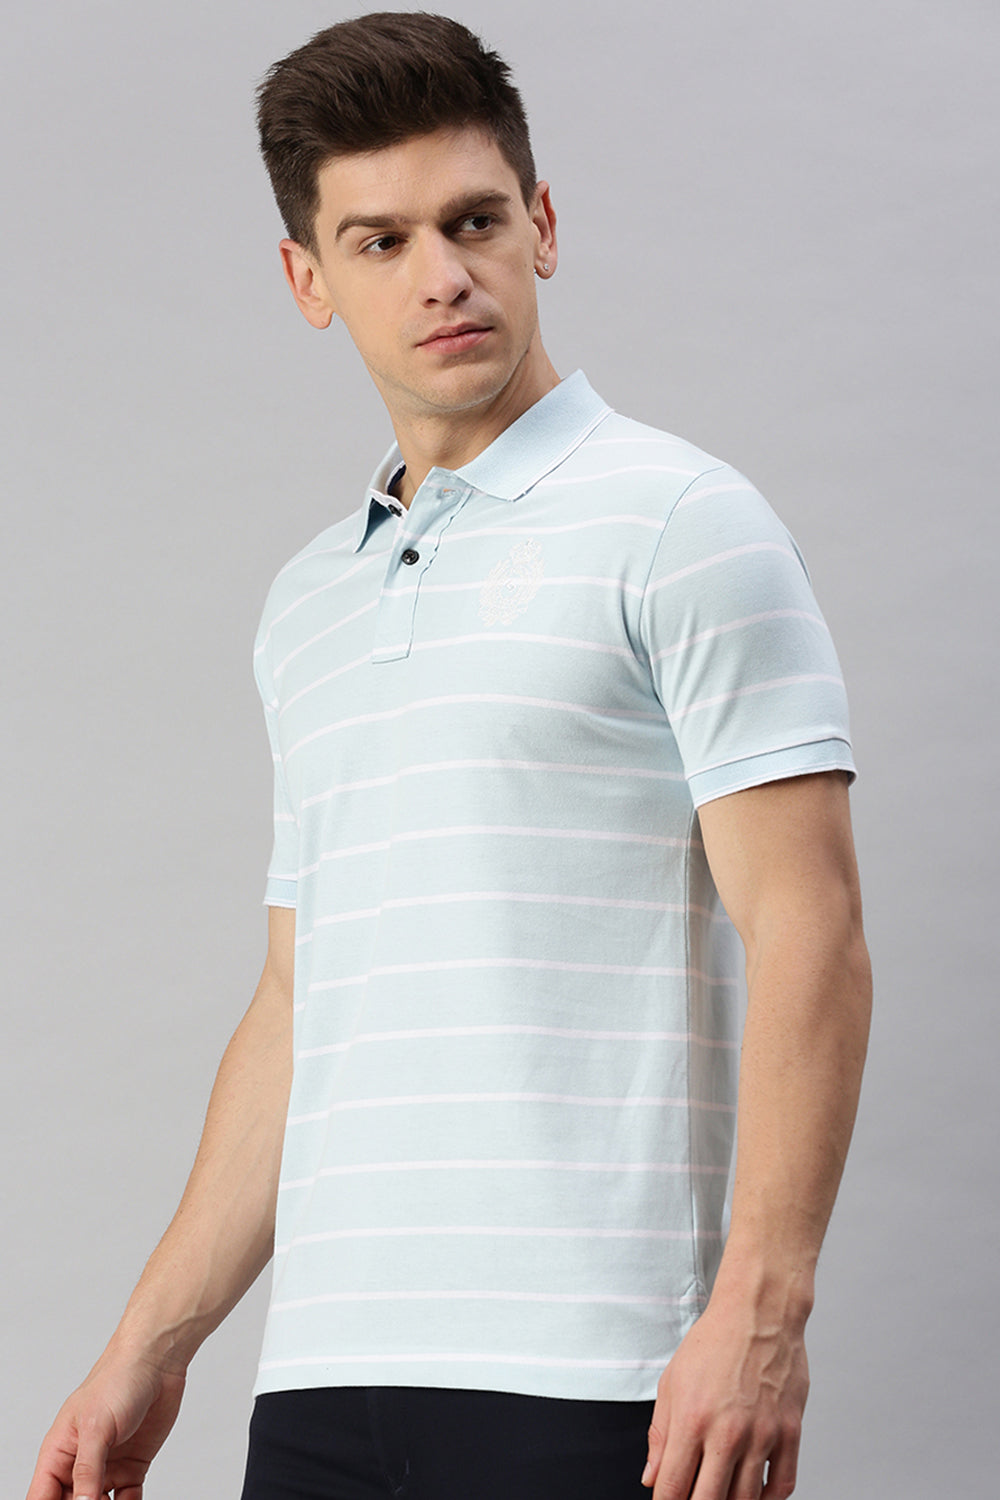 Classic Polo Men's Cotton Half Sleeve Striped Slim Fit Polo Neck Light Blue Color T-Shirt | Cpeg - 291 A